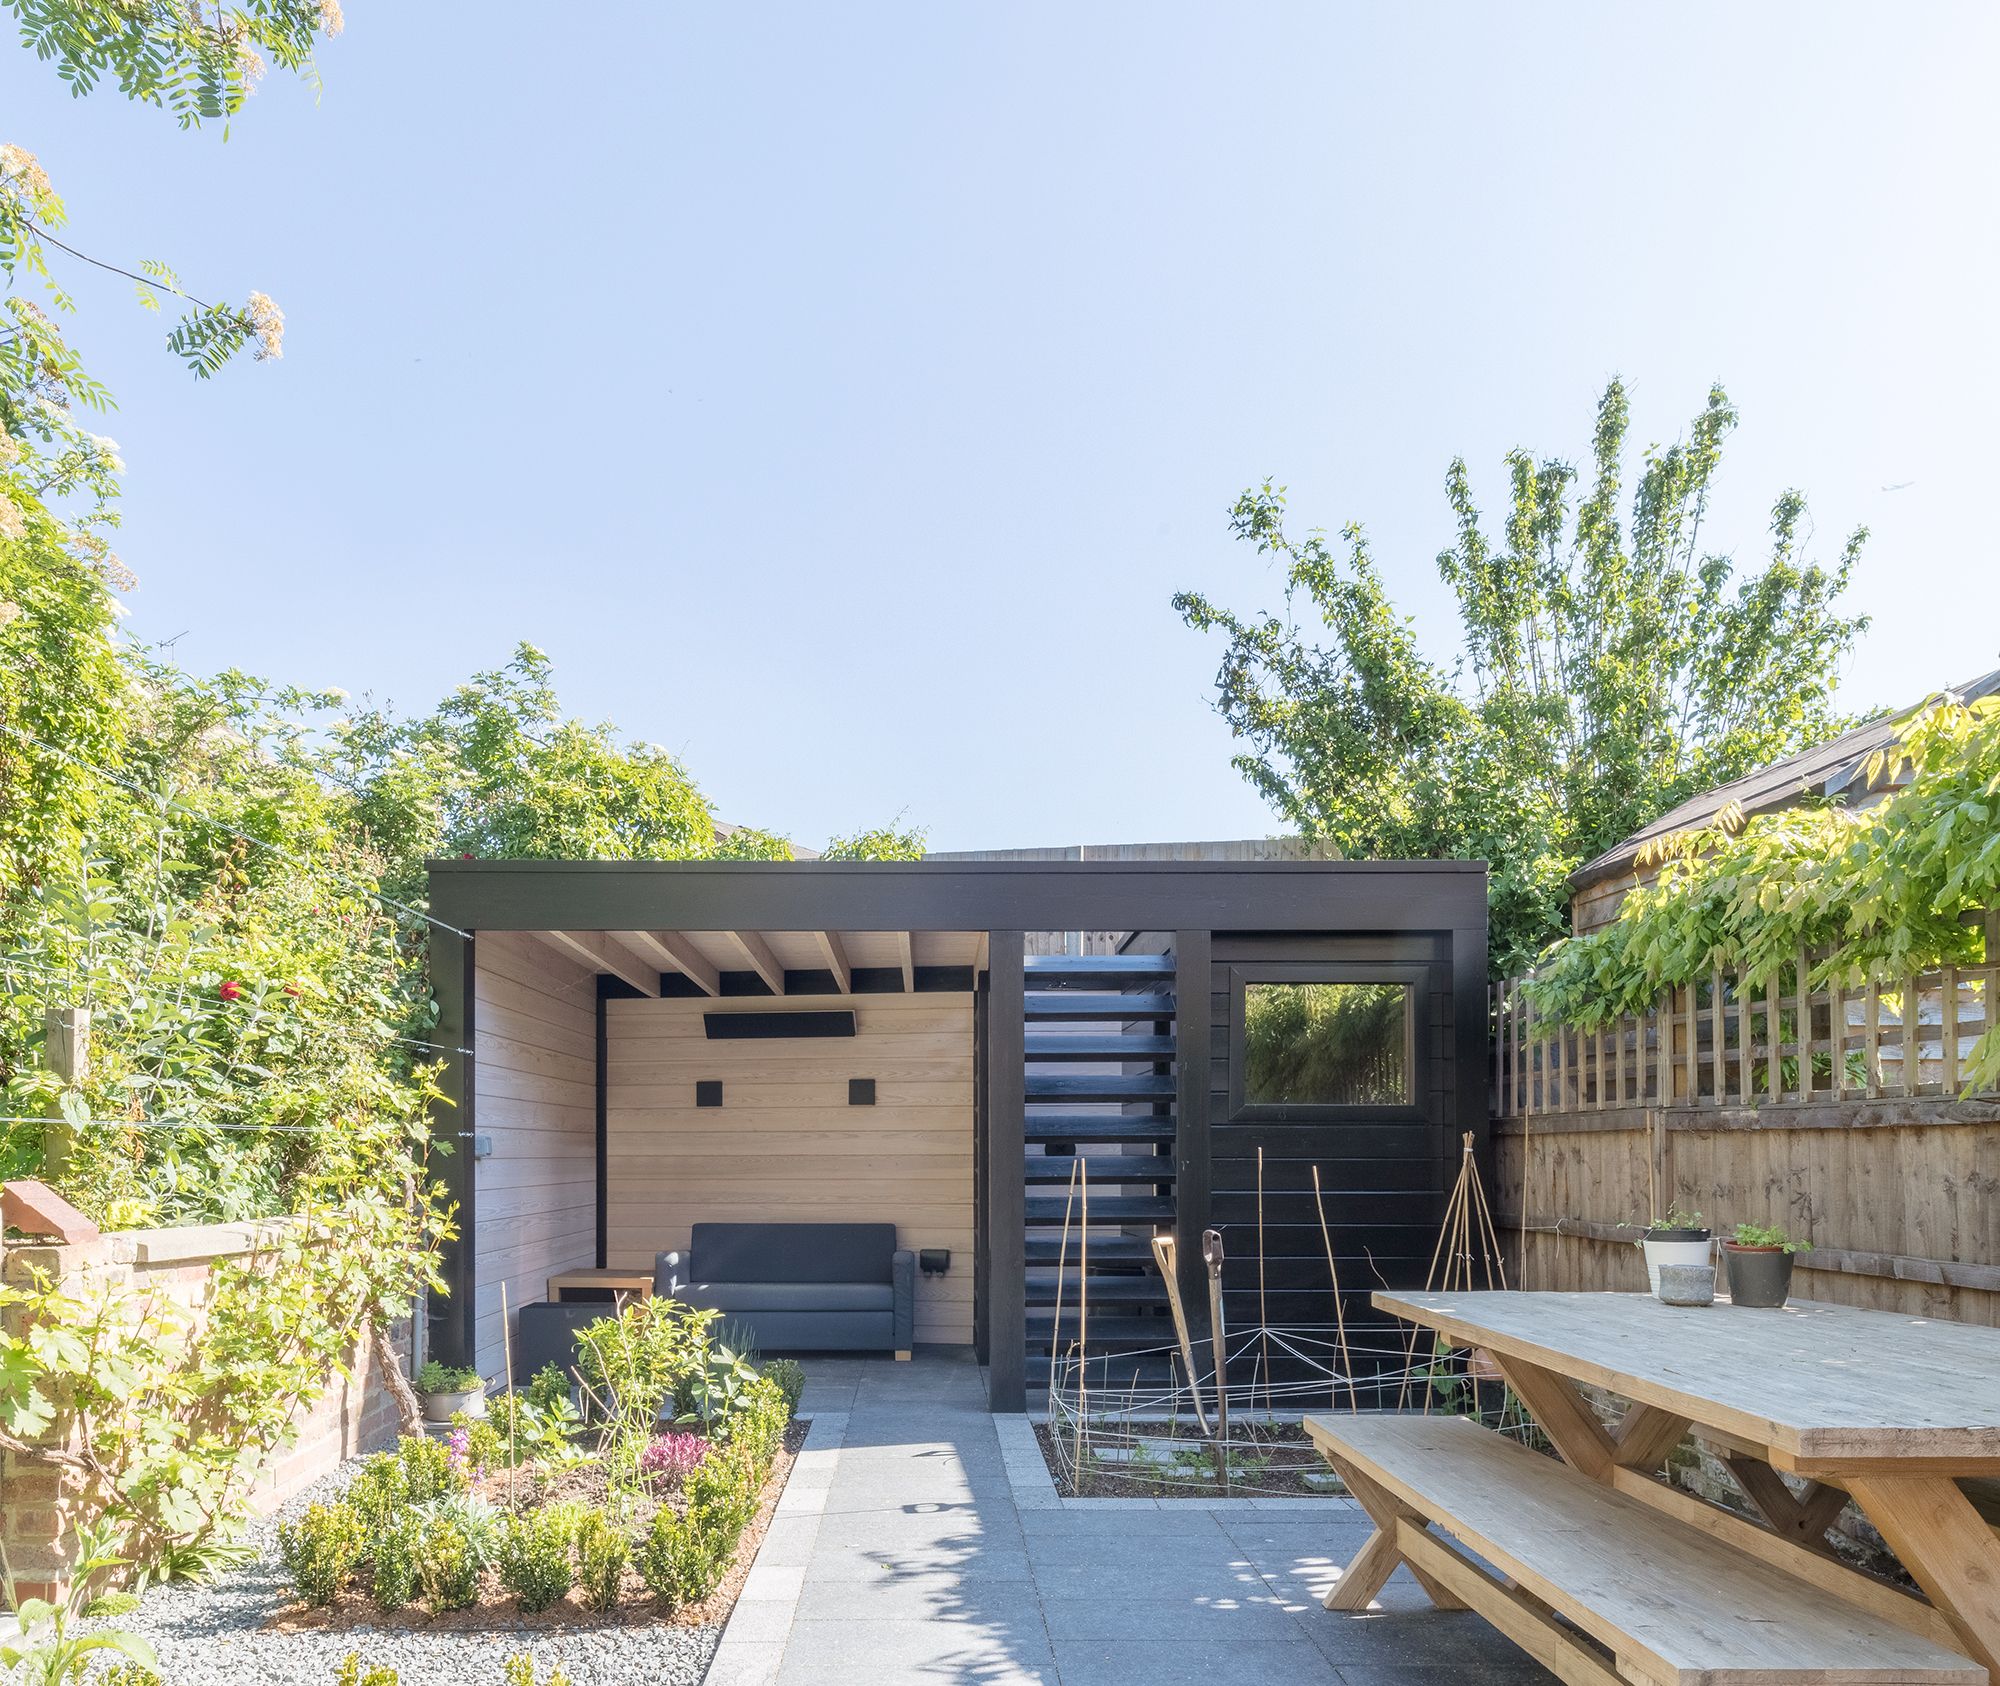 29 Small Backyard Ideas Simple, How To Landscape A Small Backyard